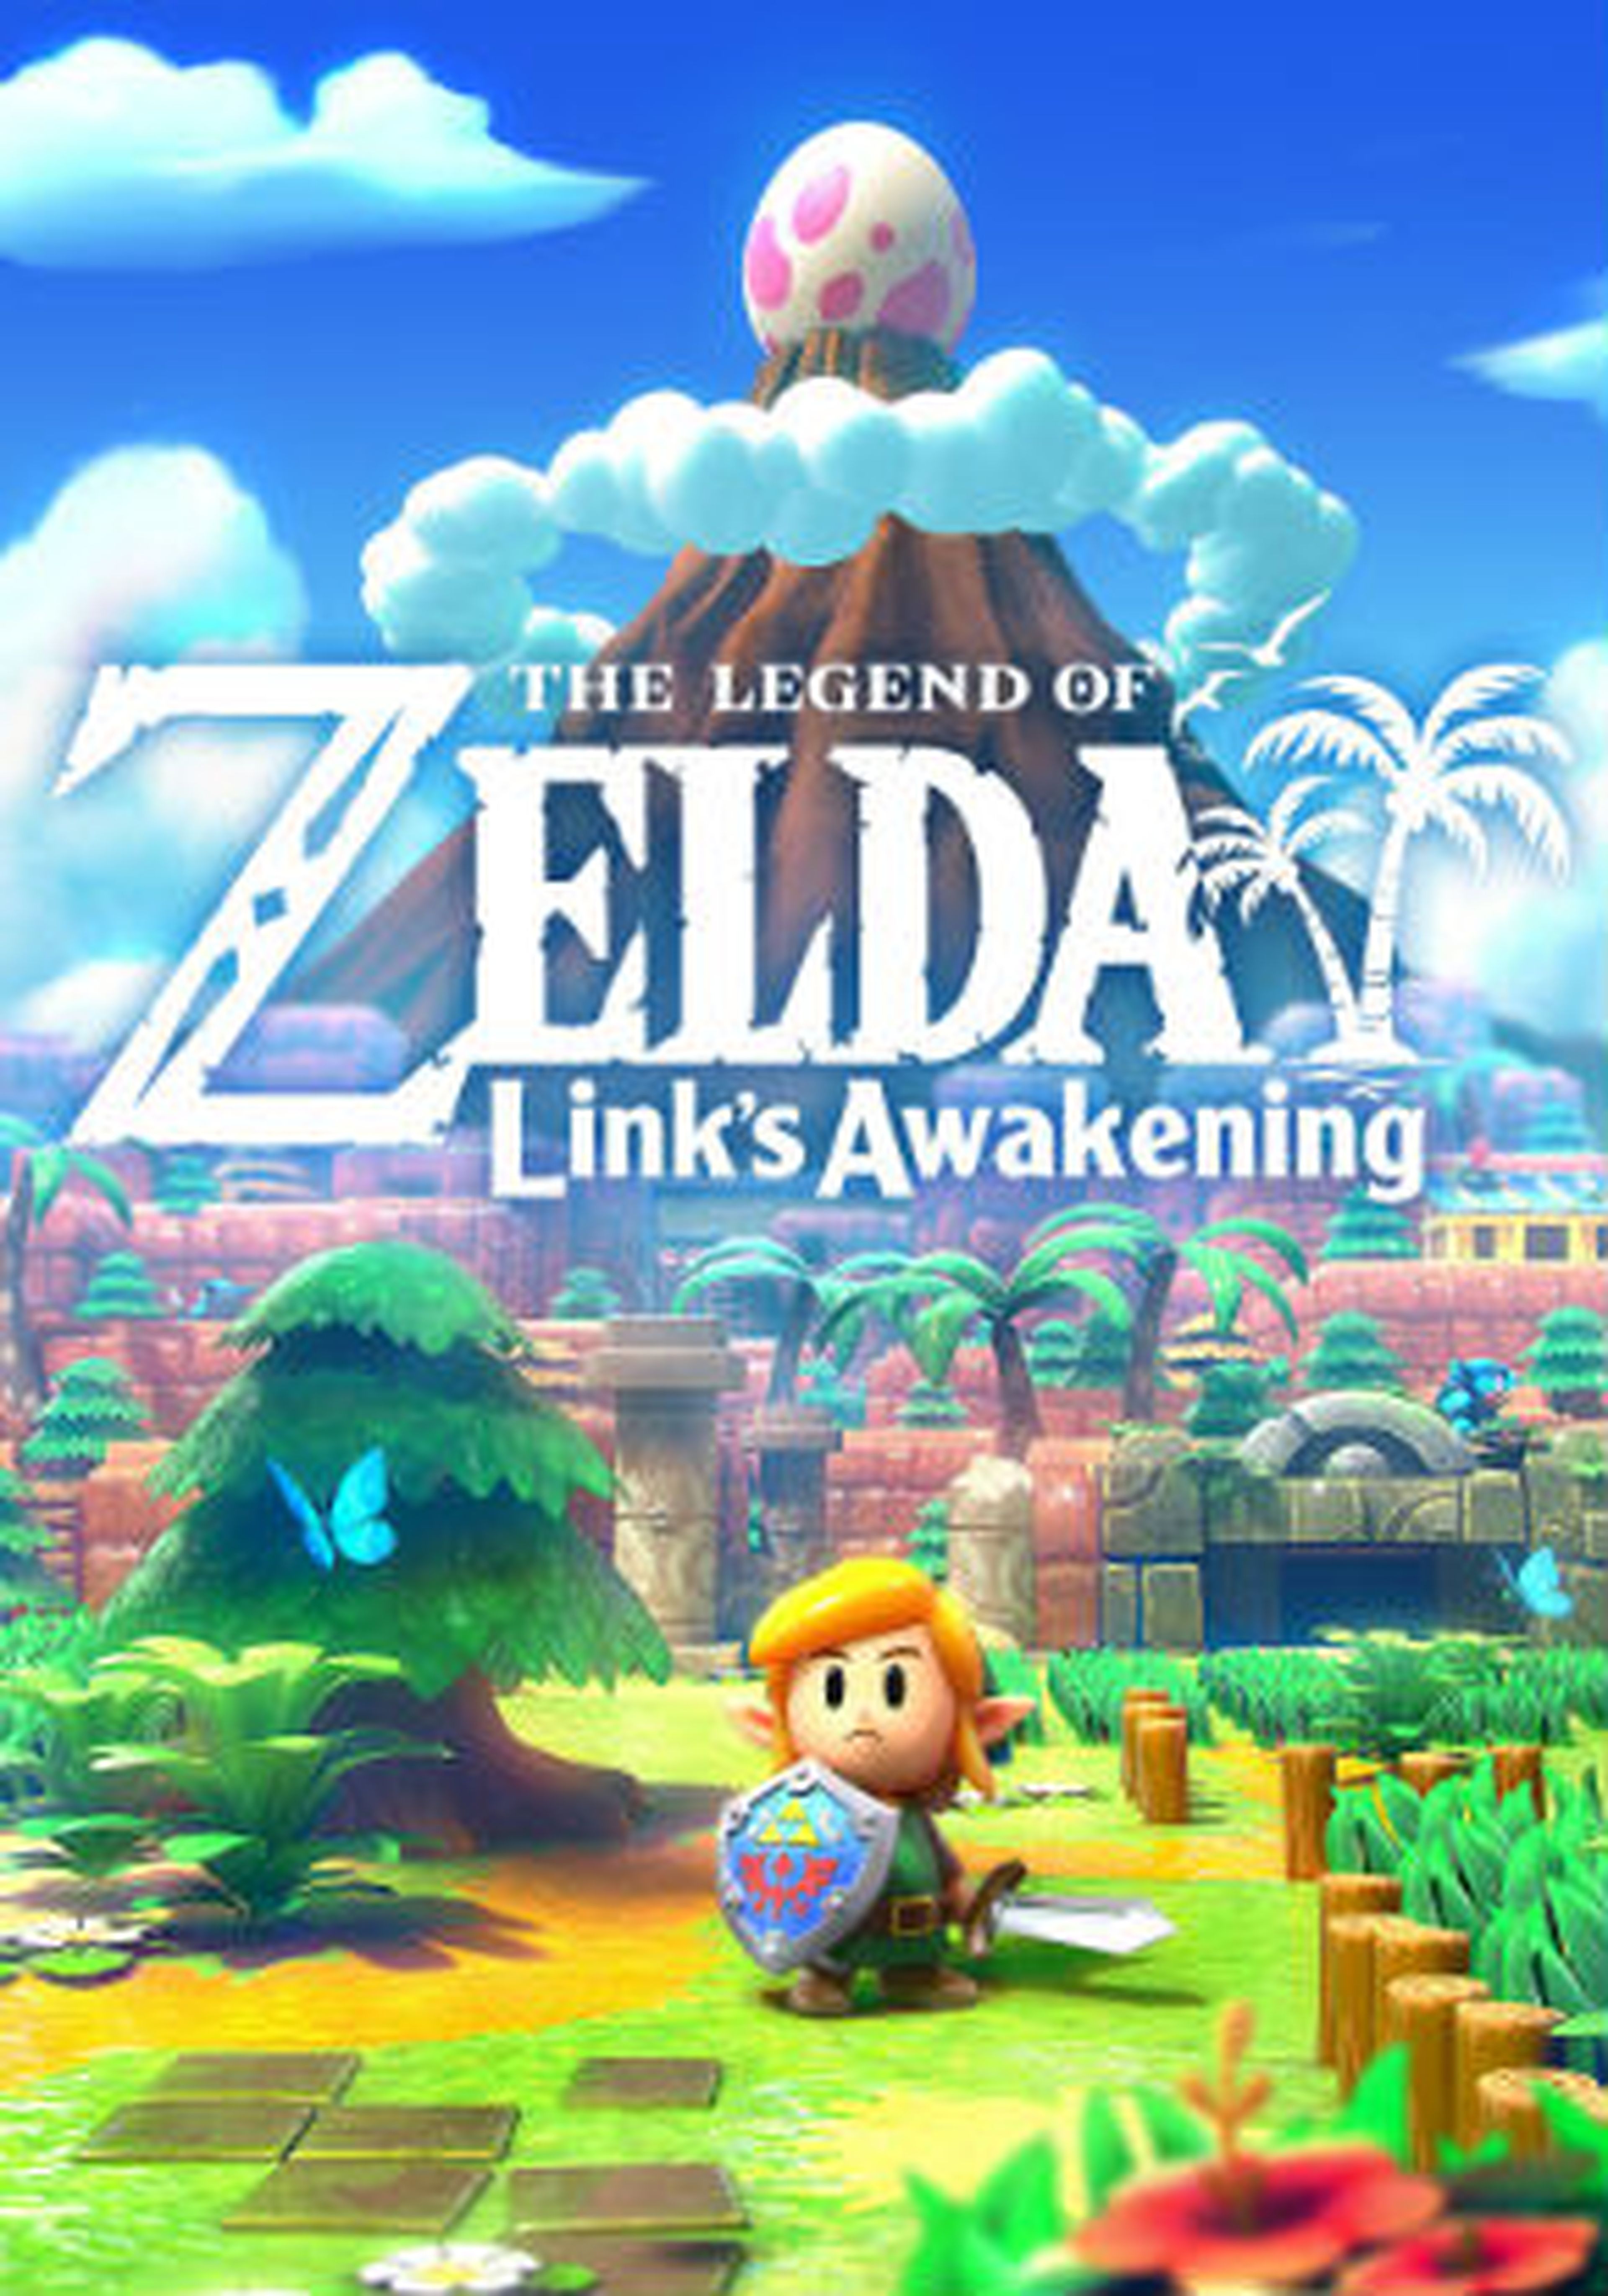 Carátula de The Legend of Zelda Link's Awakening